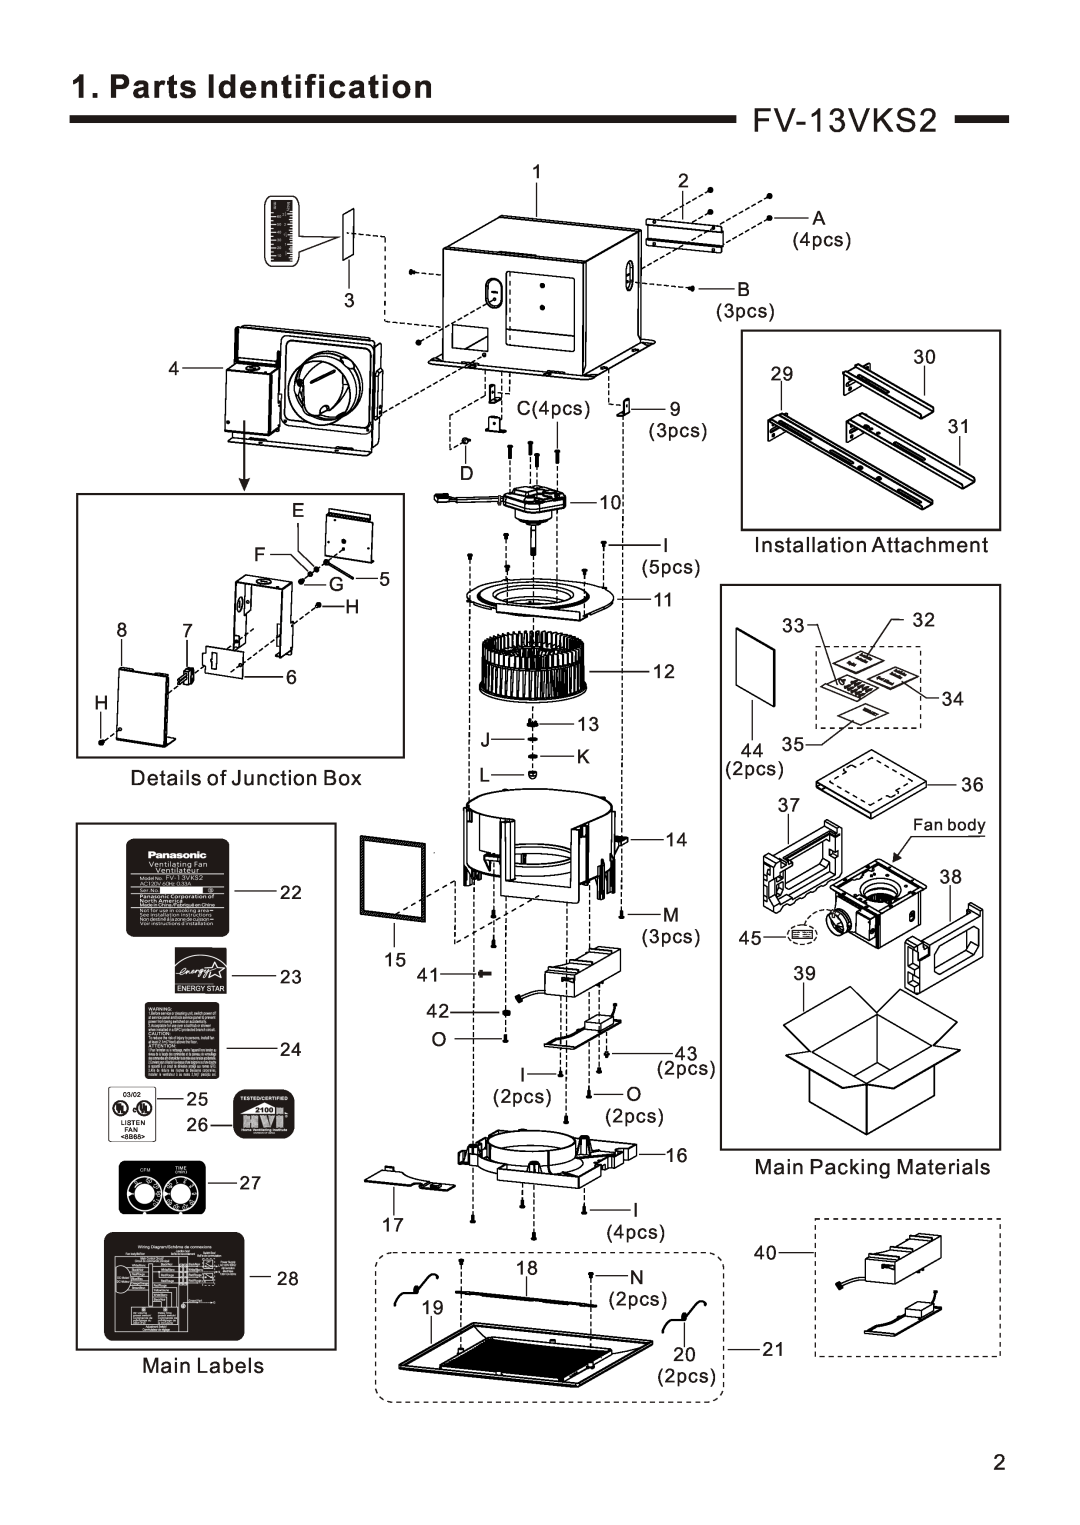 Panasonic FV-13VKM2 FV-13VKS2, Parts Identification, Installation Attachment, Details of Junction Box, Main Labels 